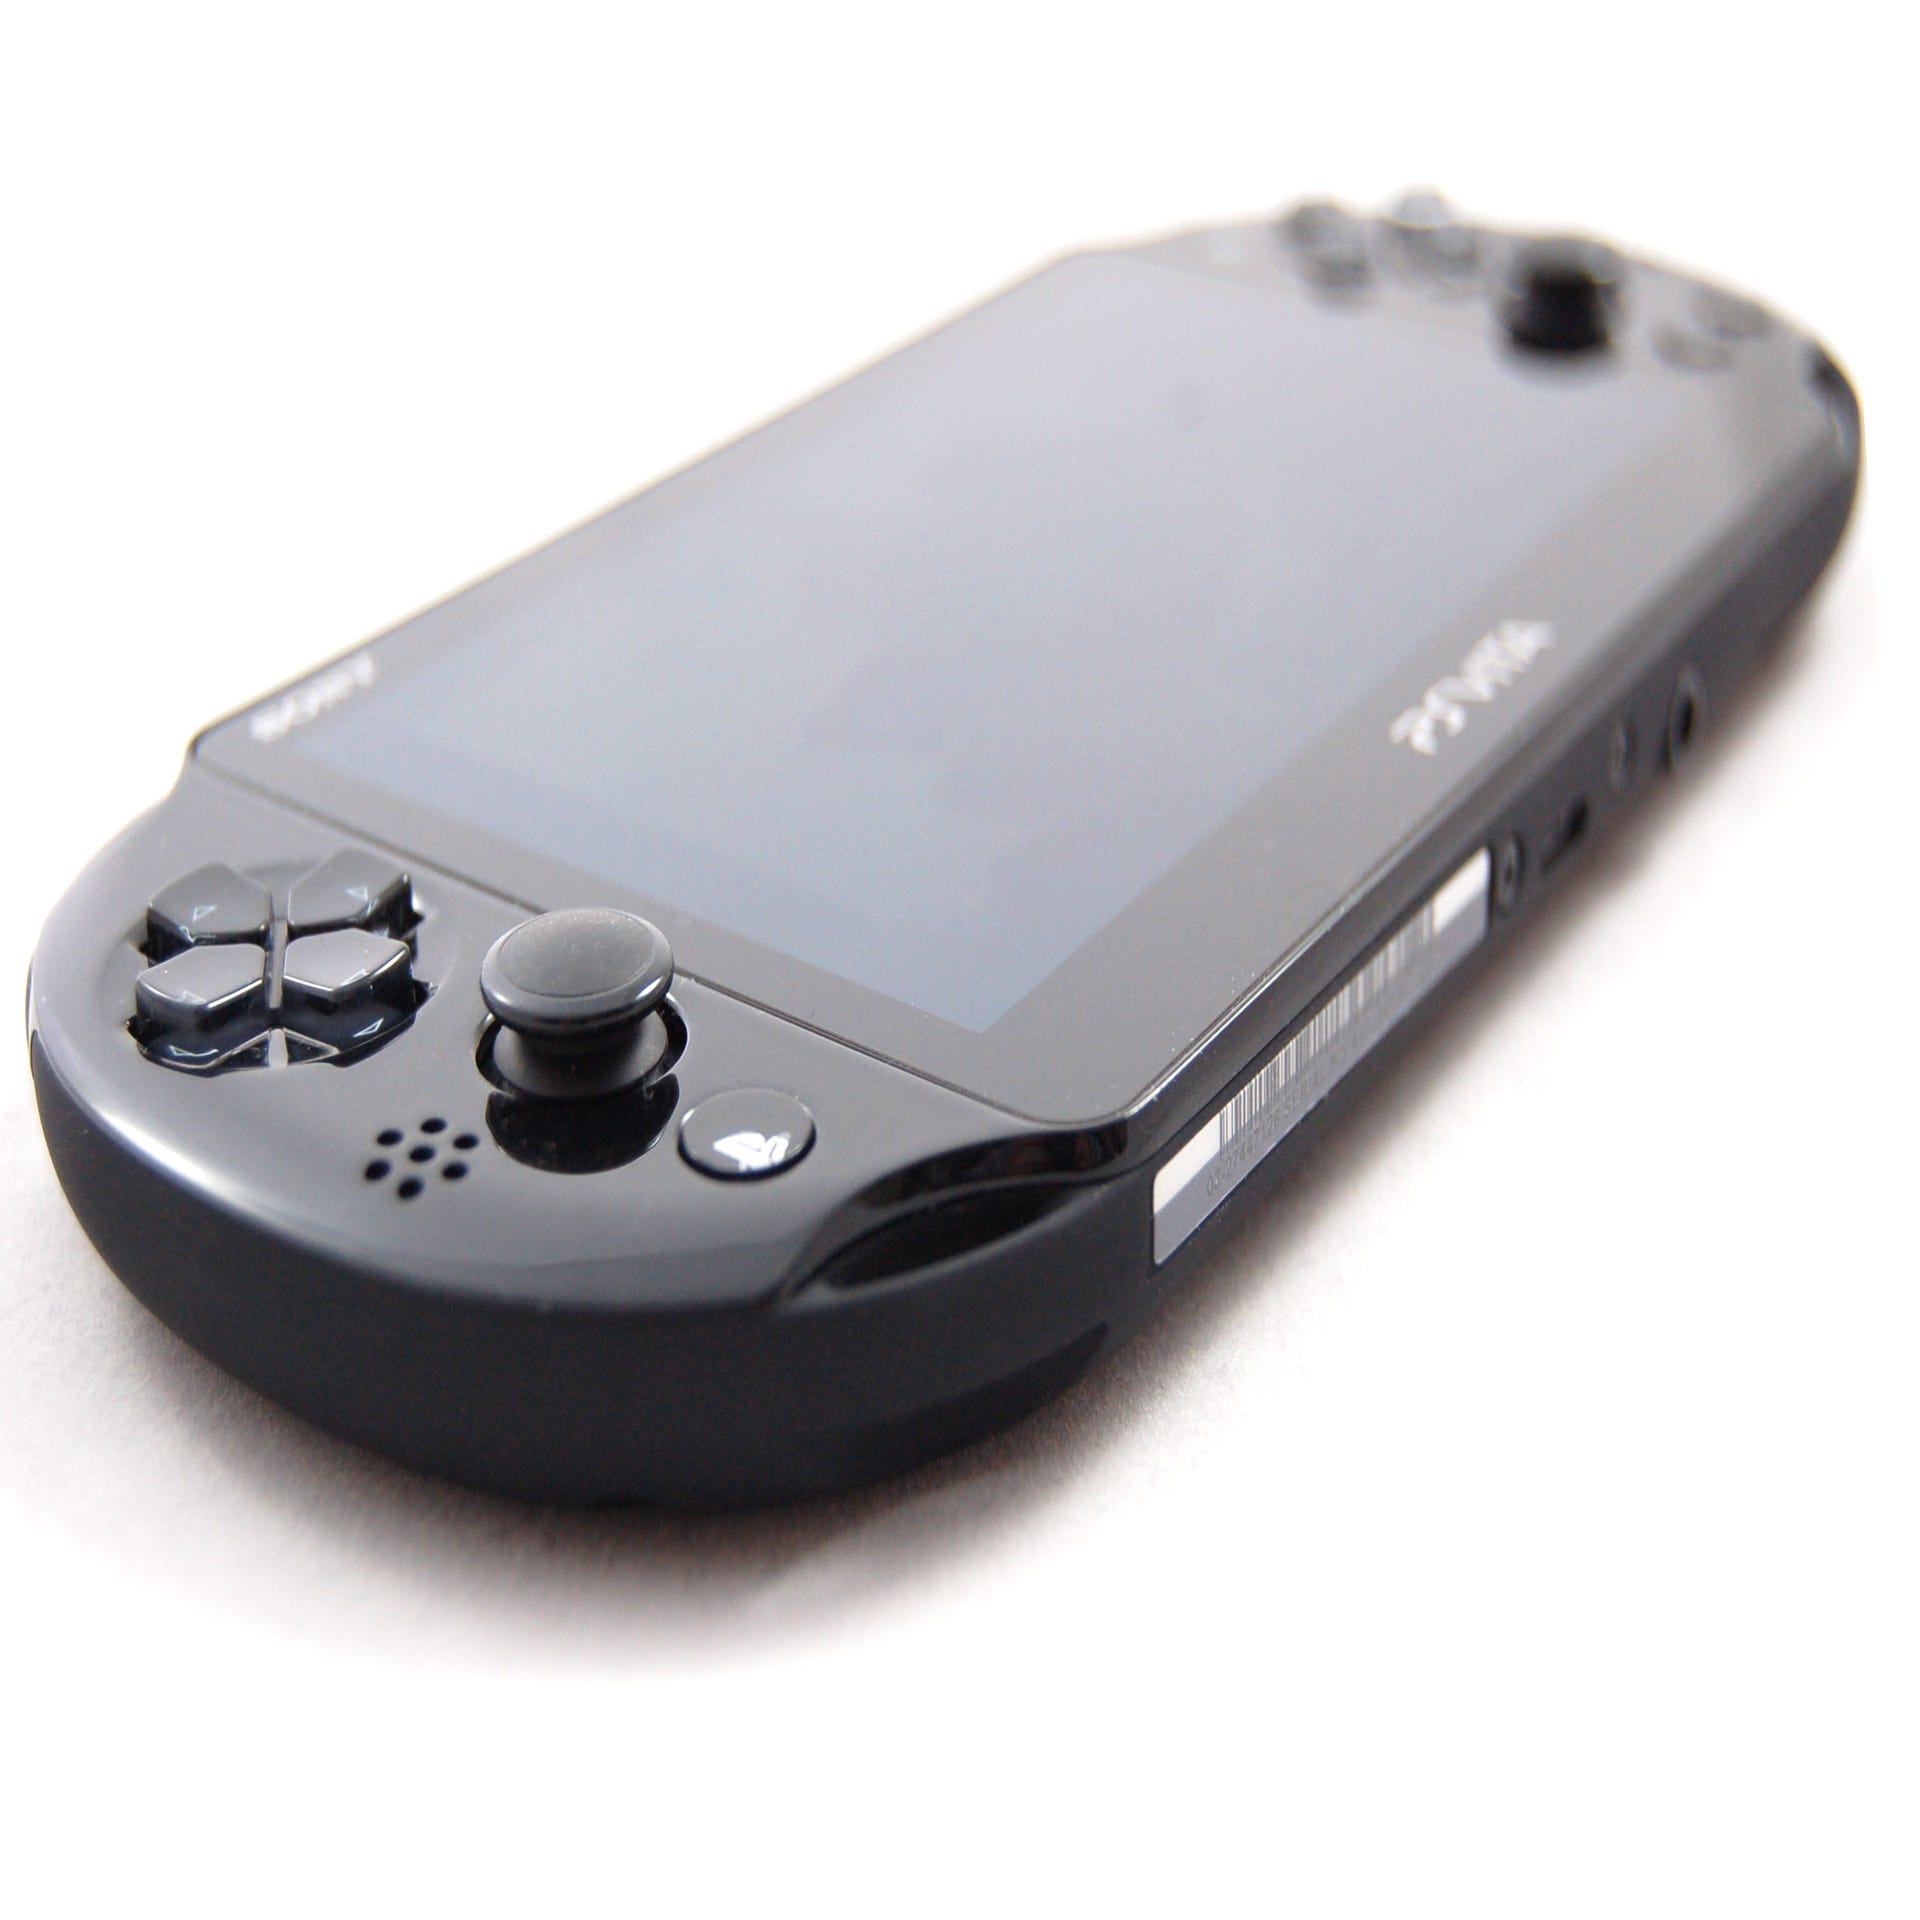 PS Vita Exclusive Plastic Memories Gets Two Gameplay Videos